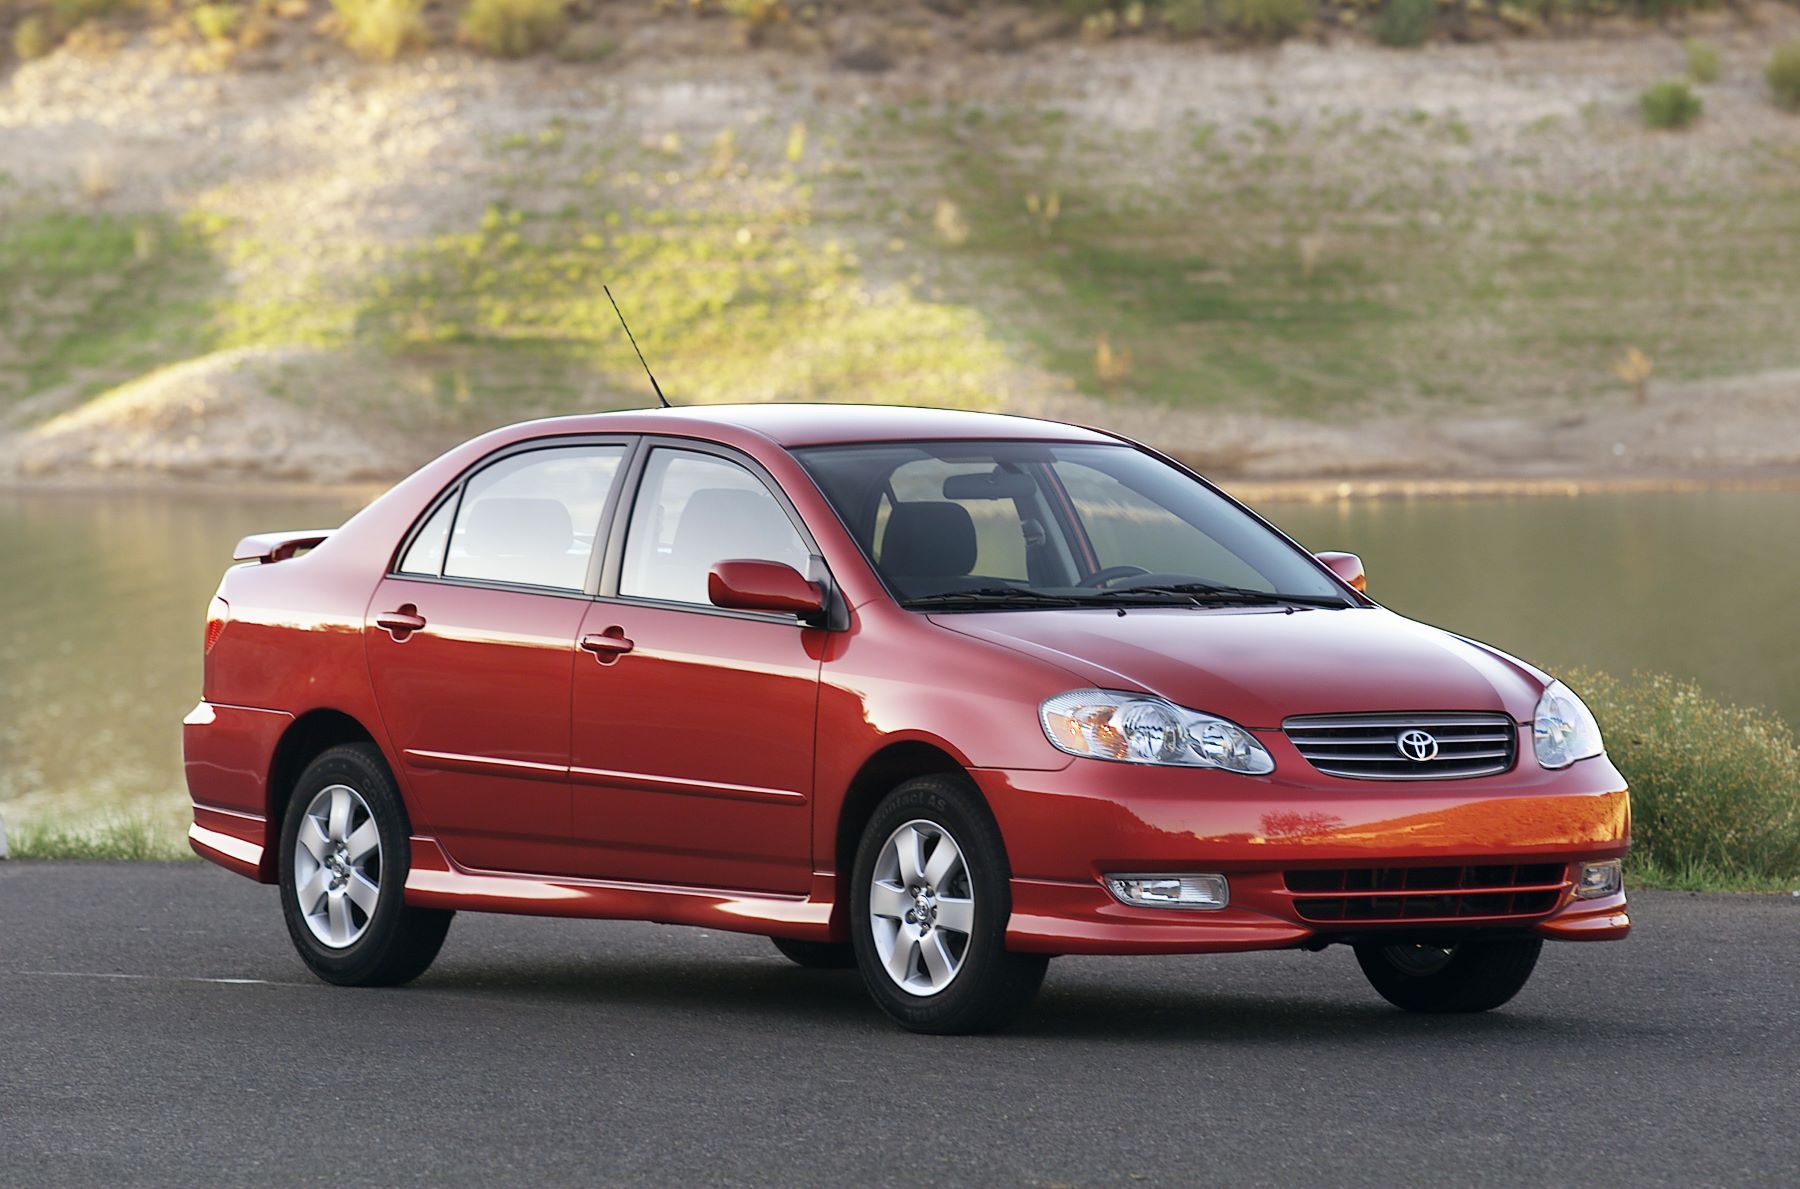 2003-2006 Toyota Corolla sedan model year's design in red